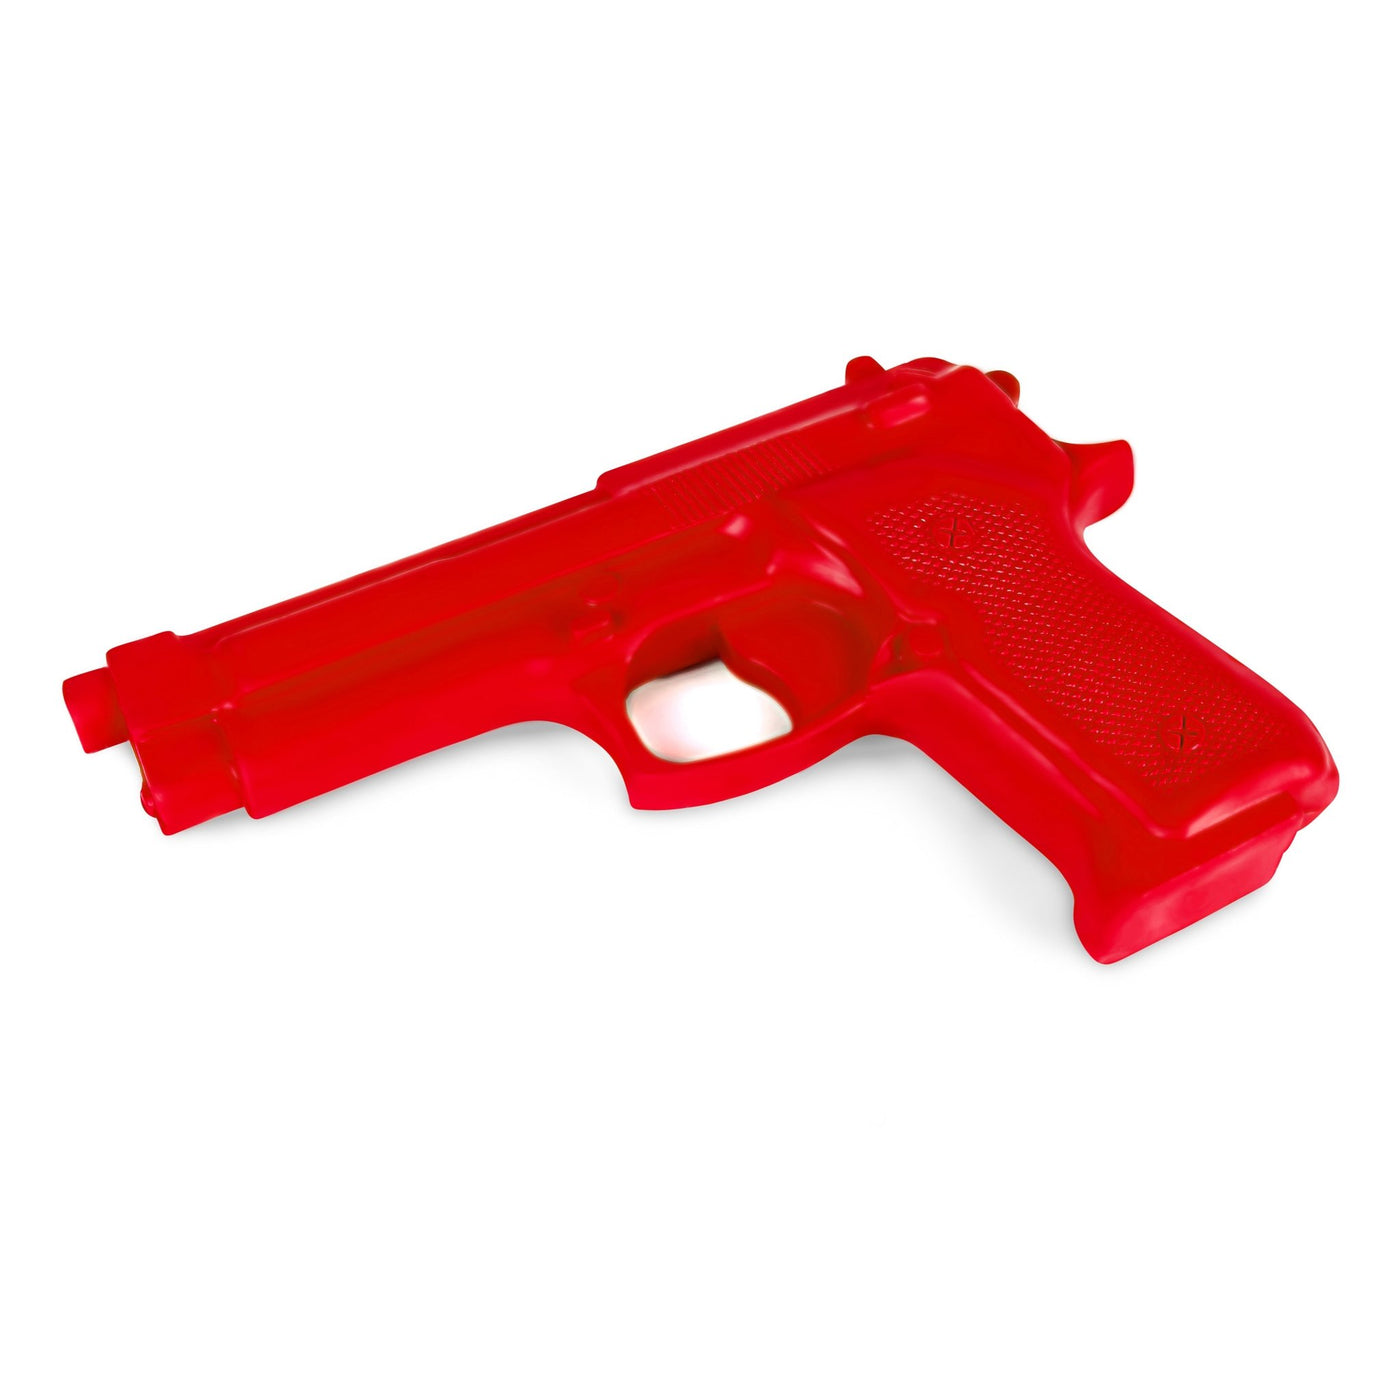 Red Hard Rubber Training Pistol - Summo Sports